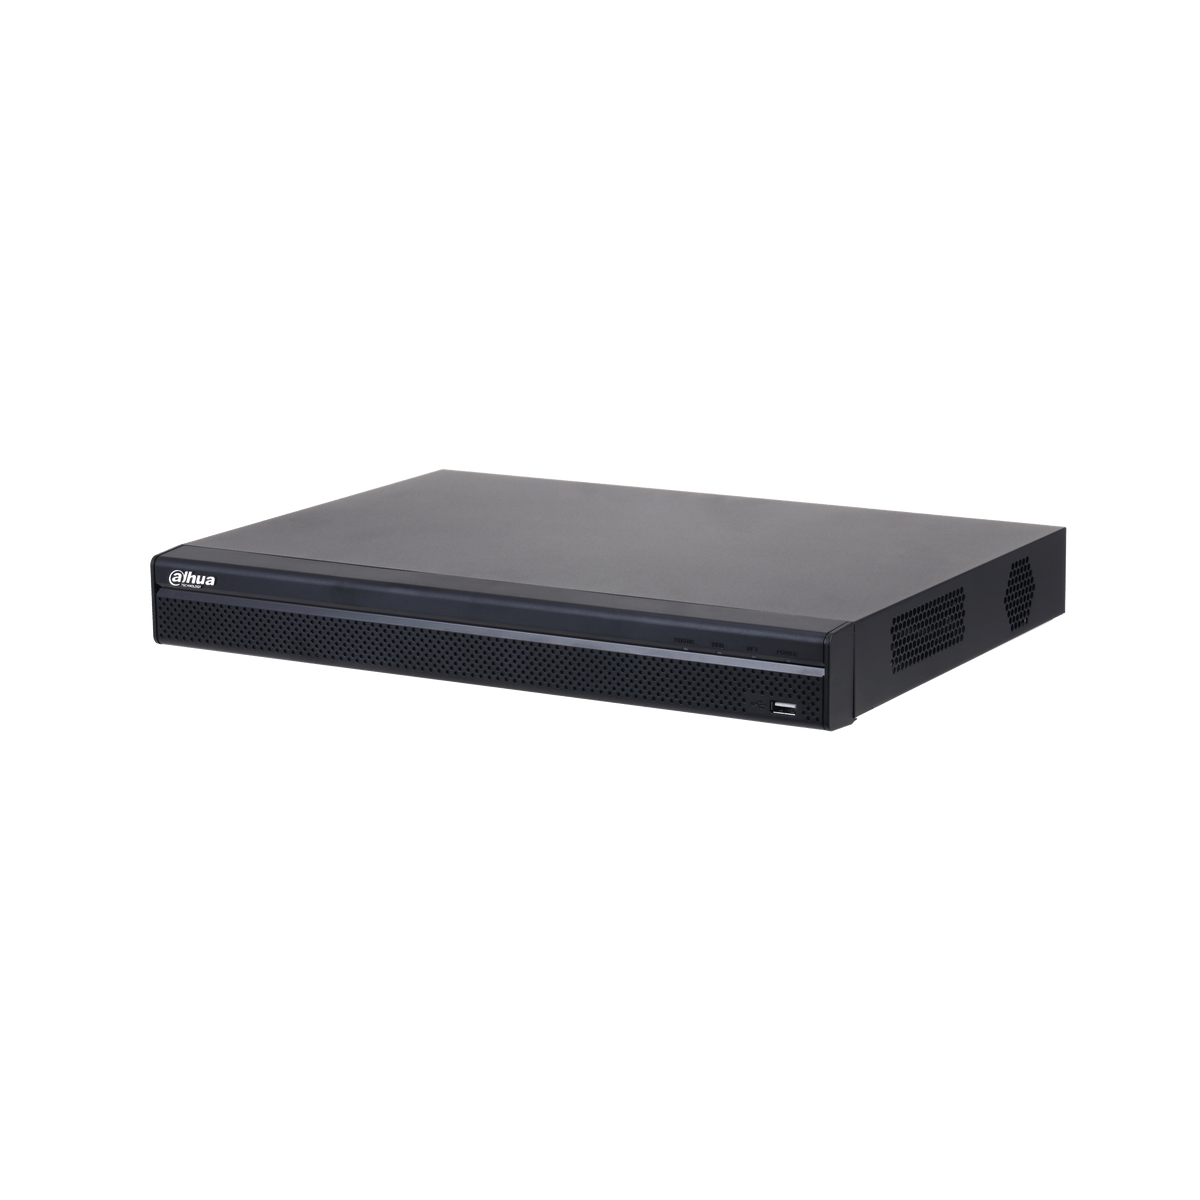 DAHUA NVR4204-4KS2/L 4 Channel 1U 2HDDs Network Video Recorder